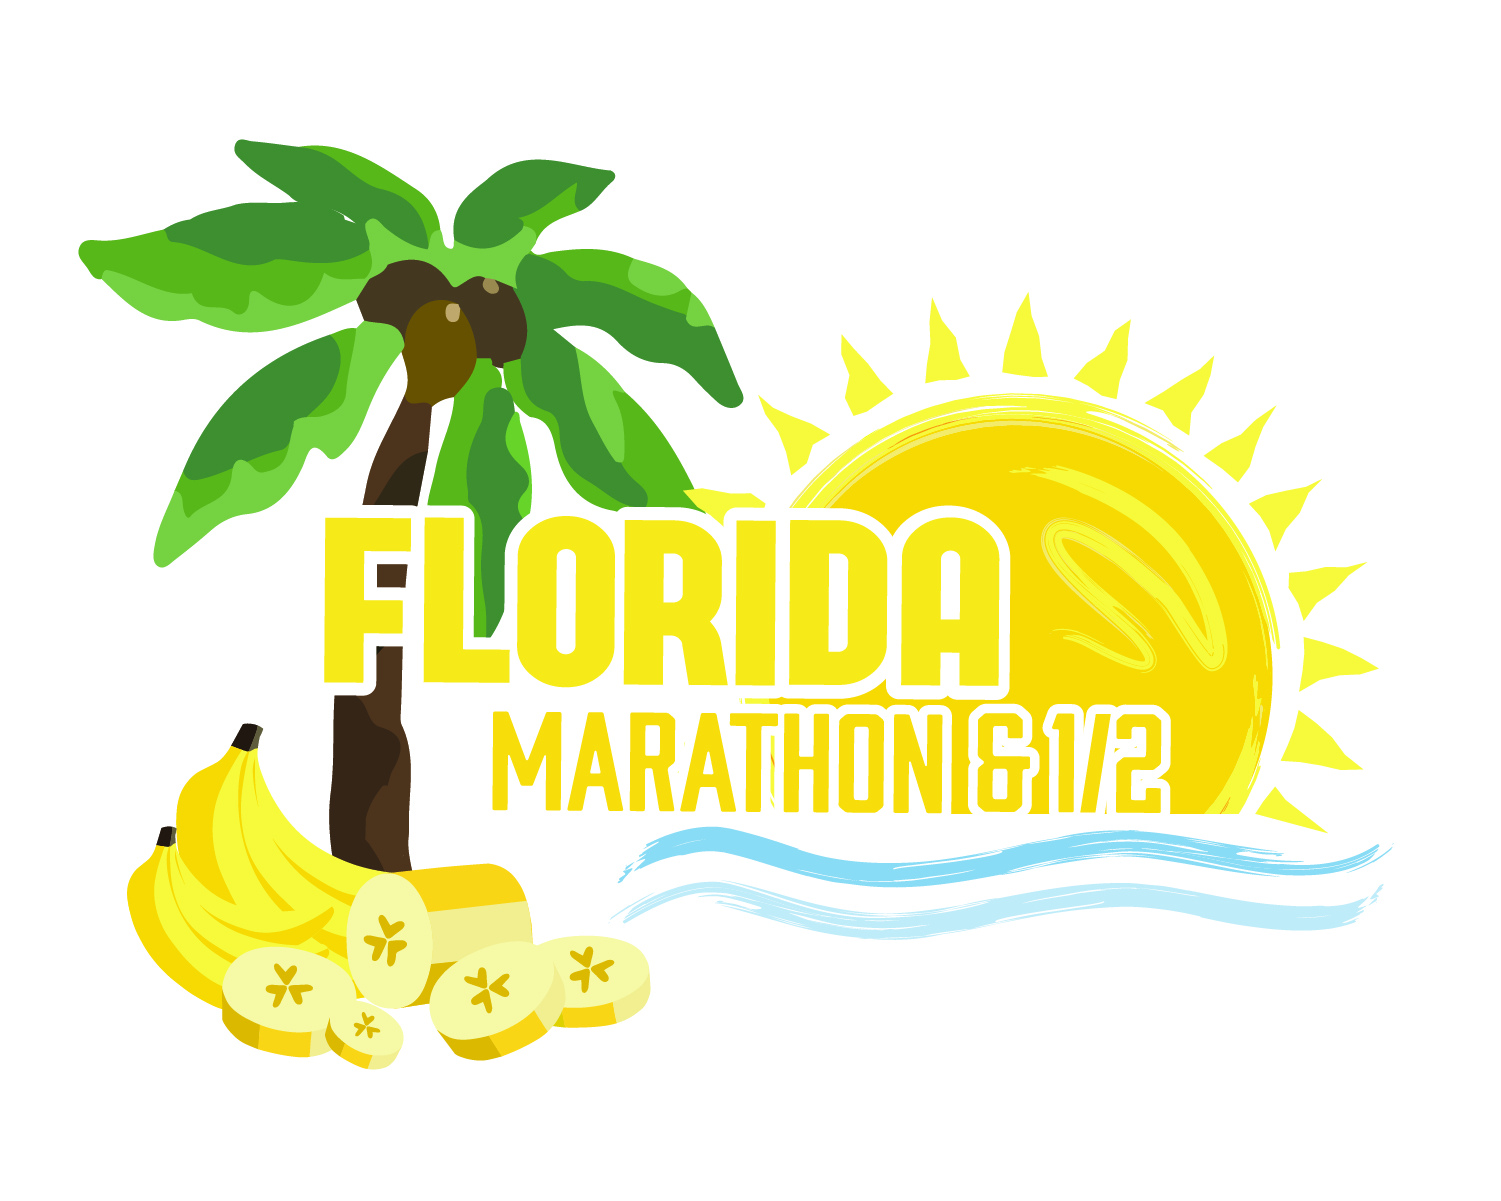 Publix Florida Marathon & 1/2 Marathon Weekend logo on RaceRaves